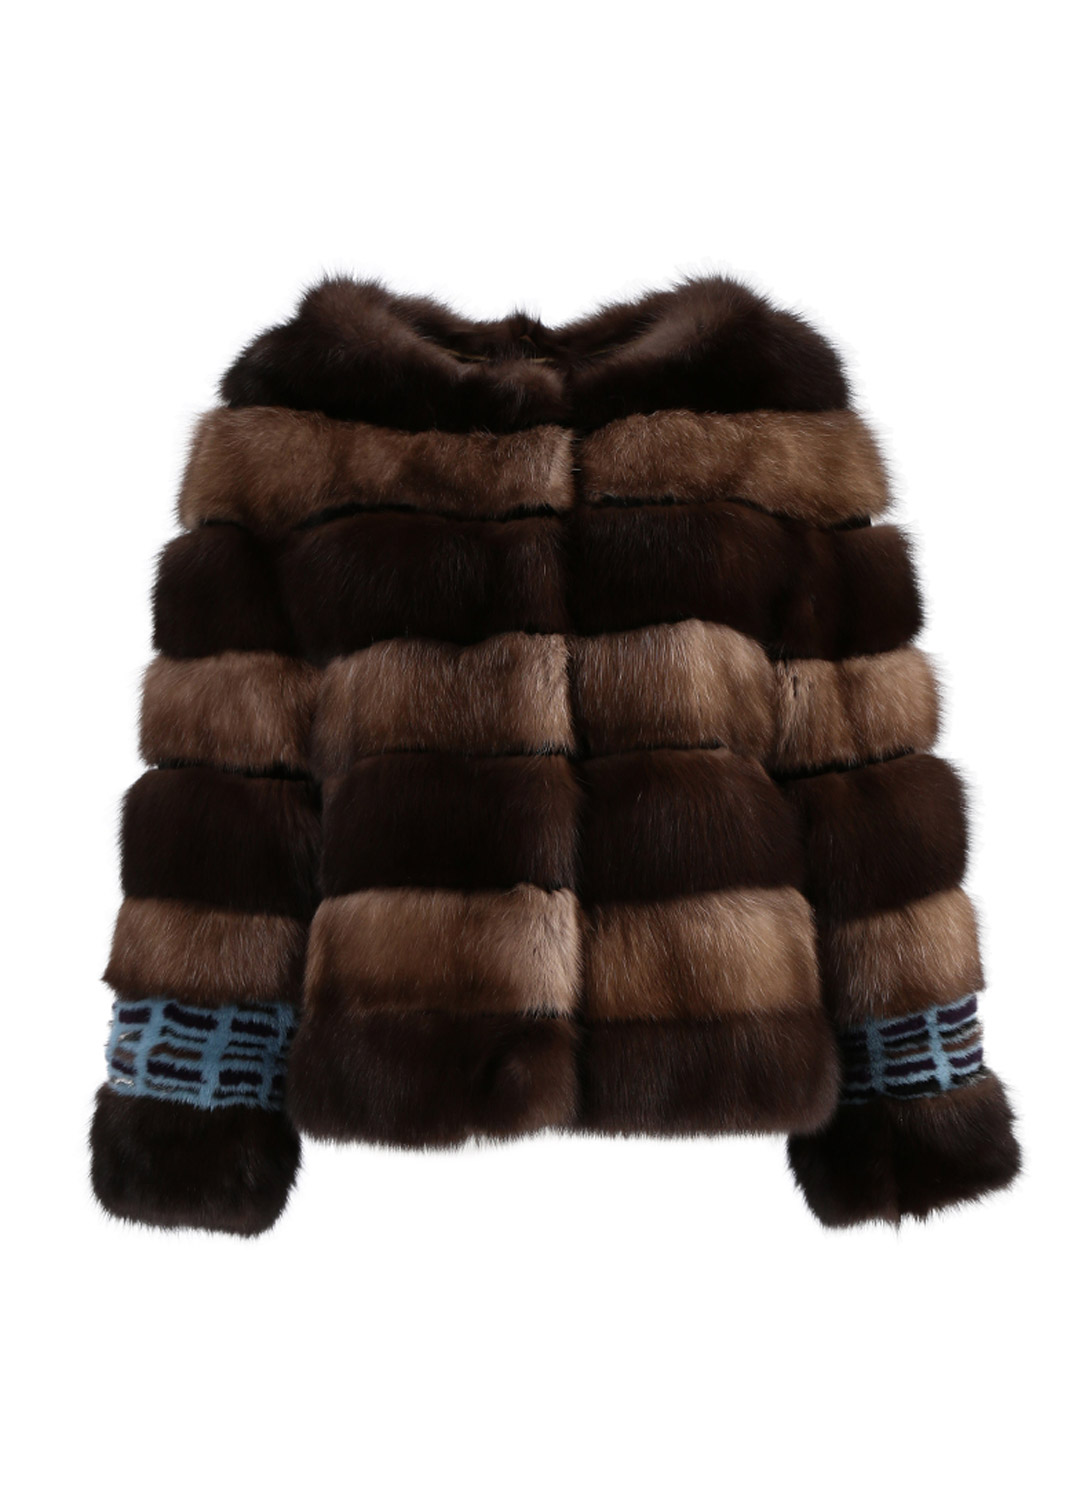 Ocean sable coat [Special grade fur]